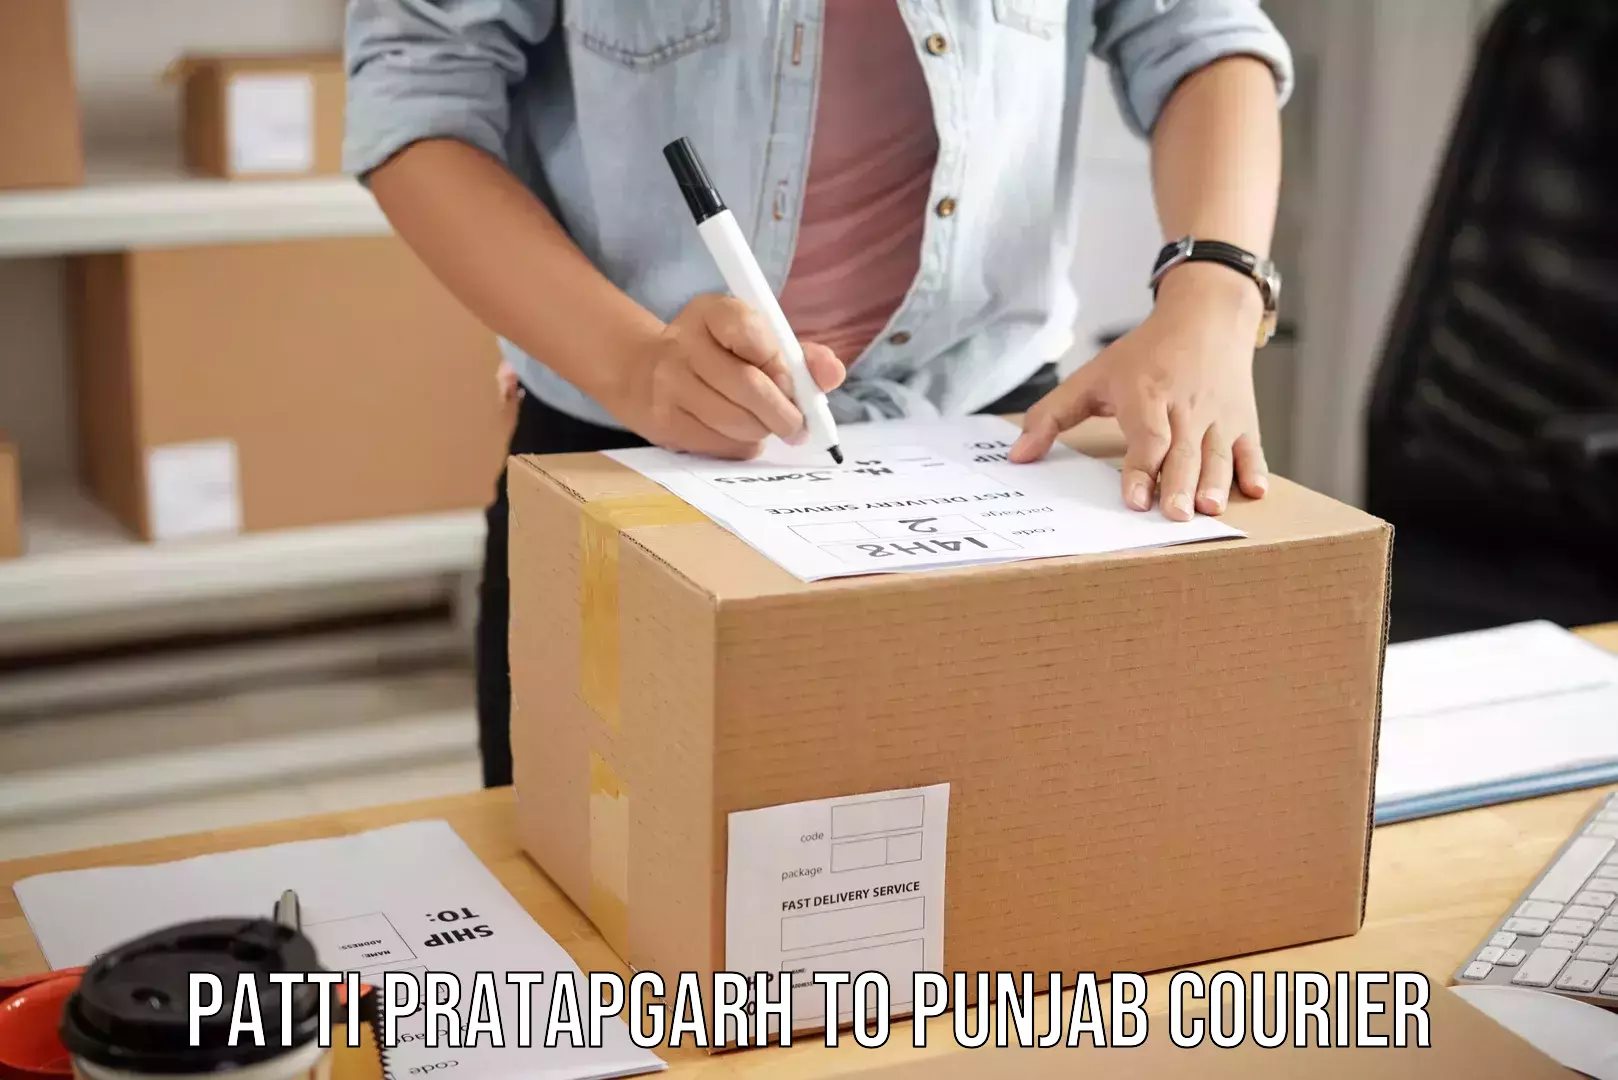 Professional baggage delivery Patti Pratapgarh to Talwara